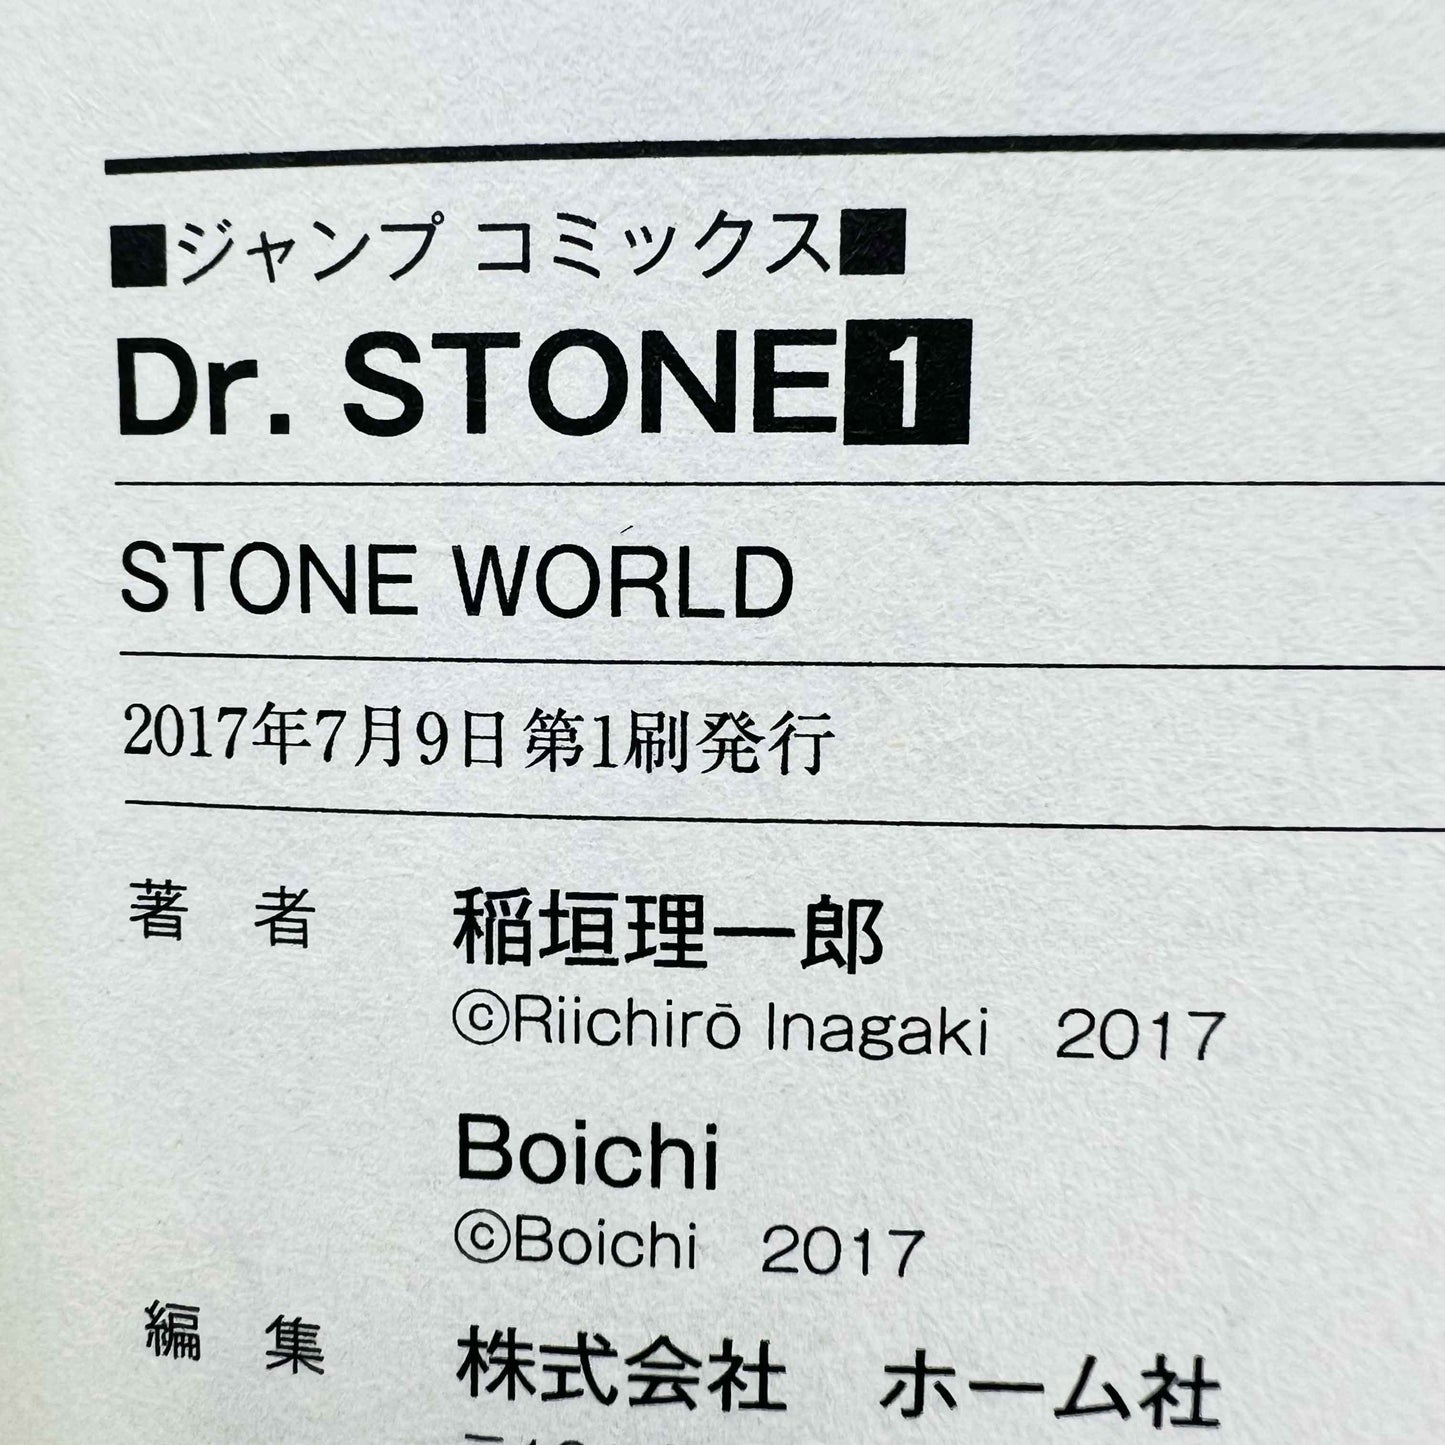 Dr. Stone - Volume 01 /w Obi - 1stPrint.net - 1st First Print Edition Manga Store - M-STONE-01-009